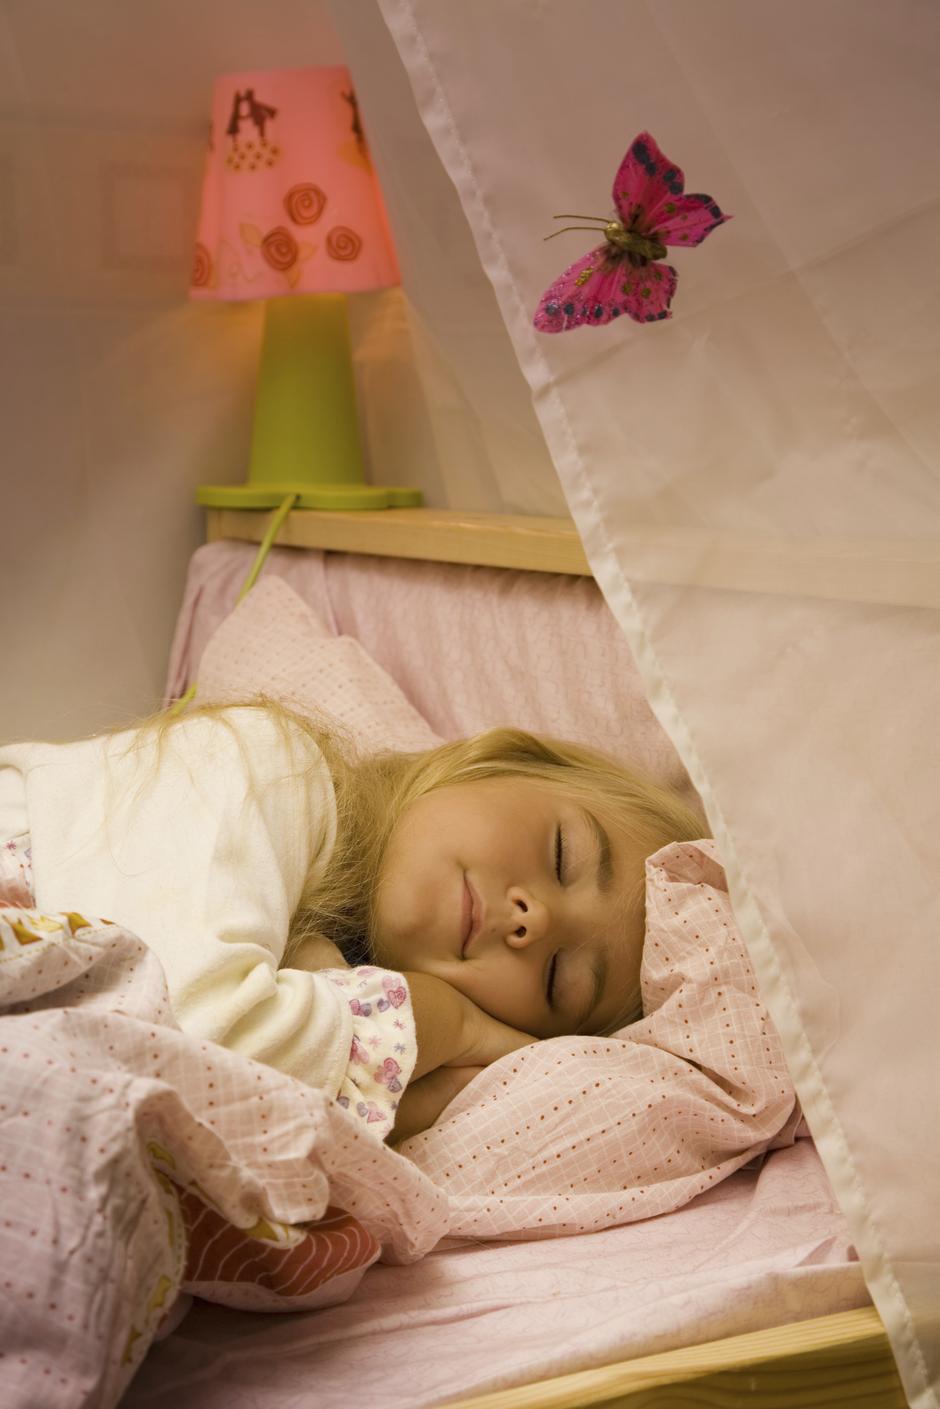 dijete spava spavanje | Author: Thinkstock